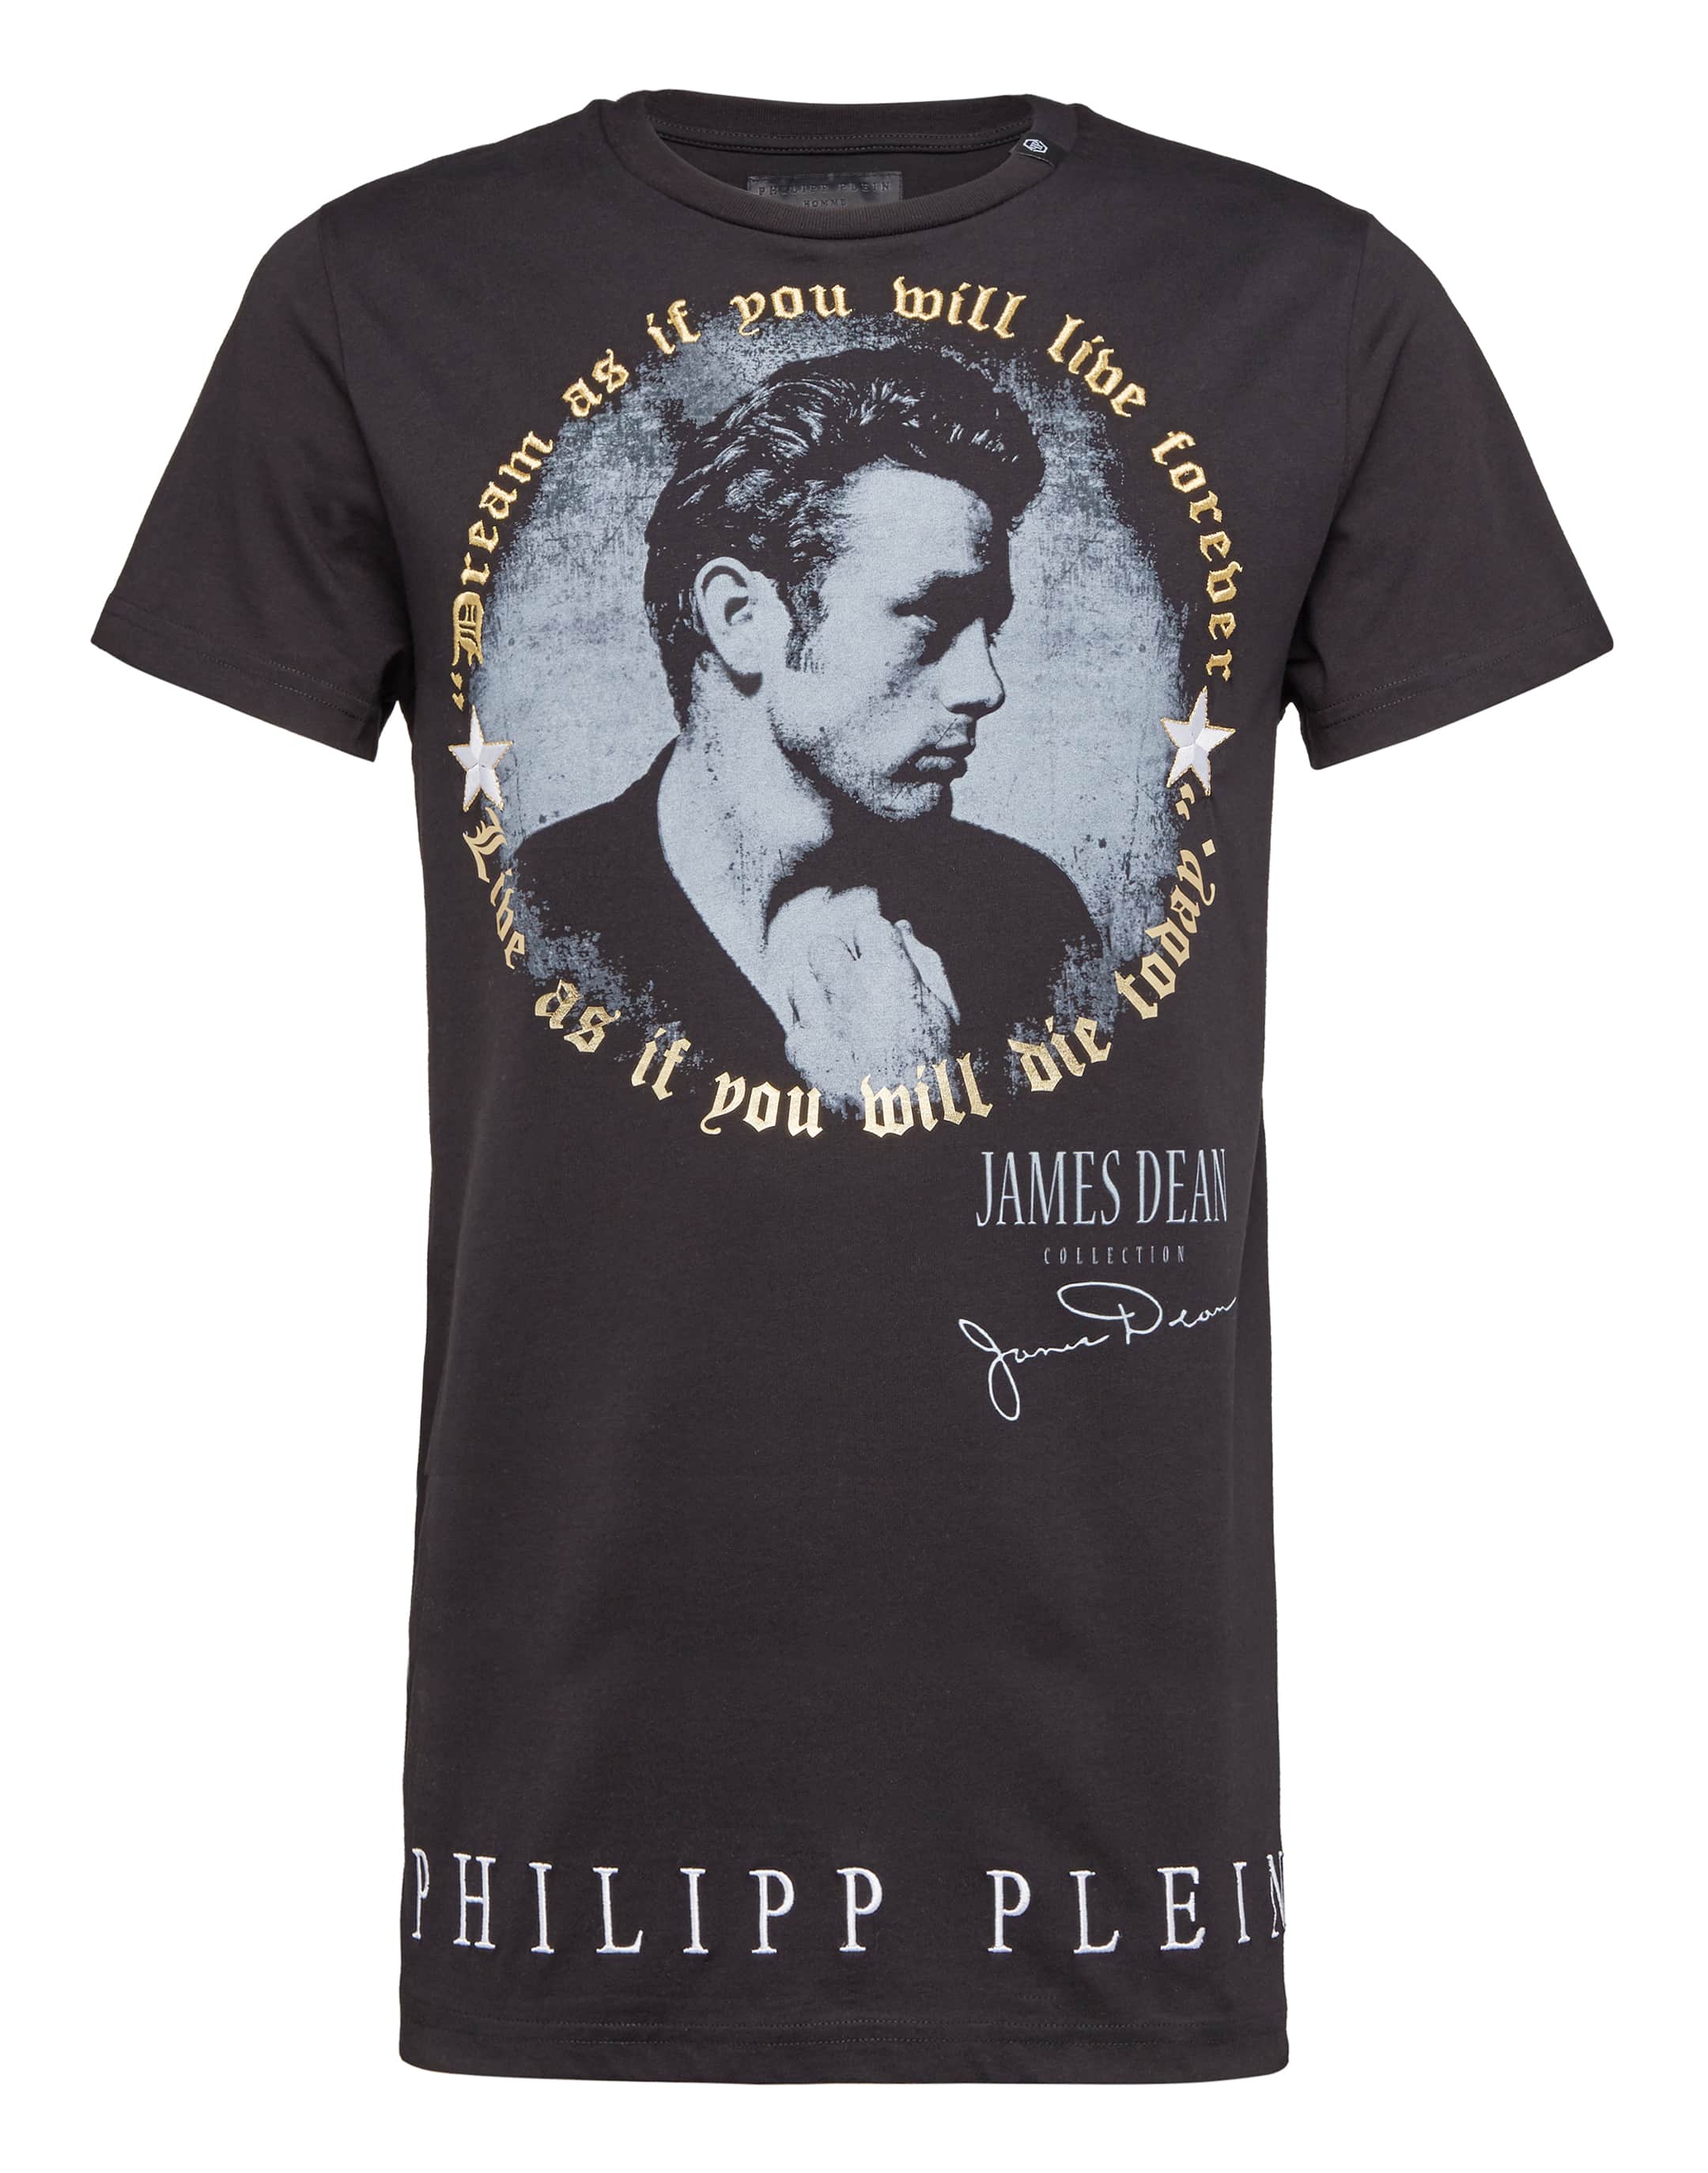 philipp plein t shirt 2020